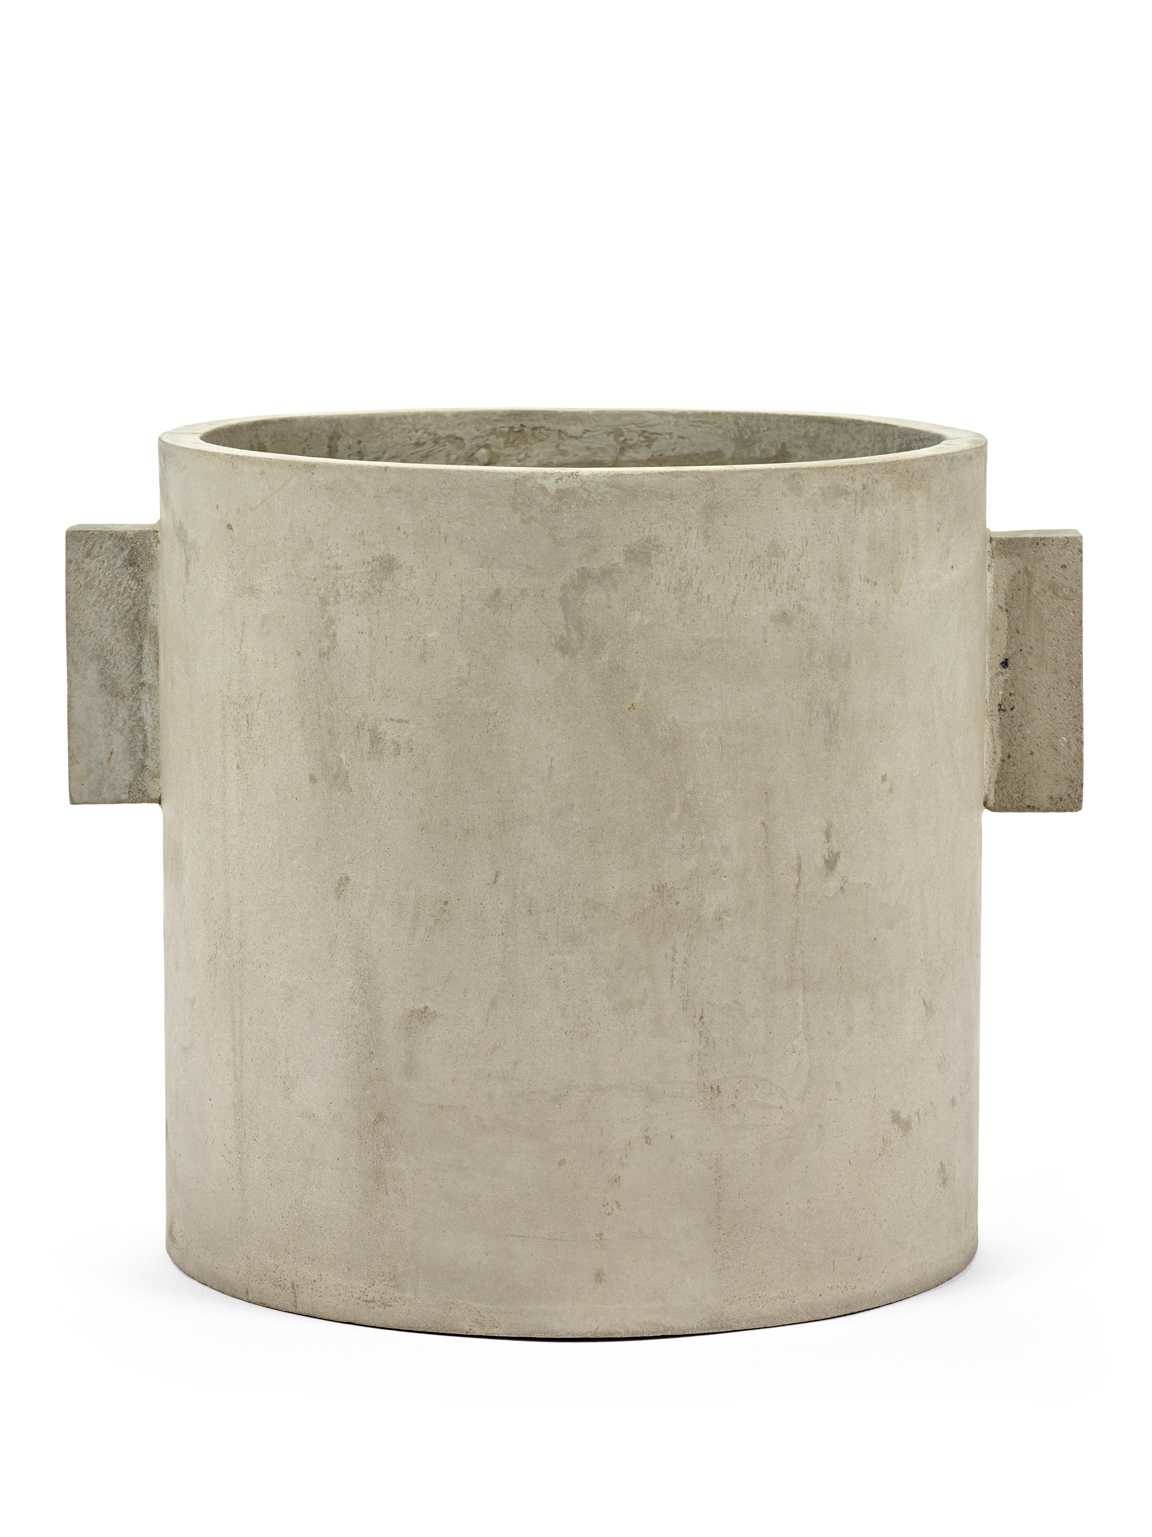 Serax - Bloempot beton - Rond - Ø 27 cm / Marie - Lifestyle